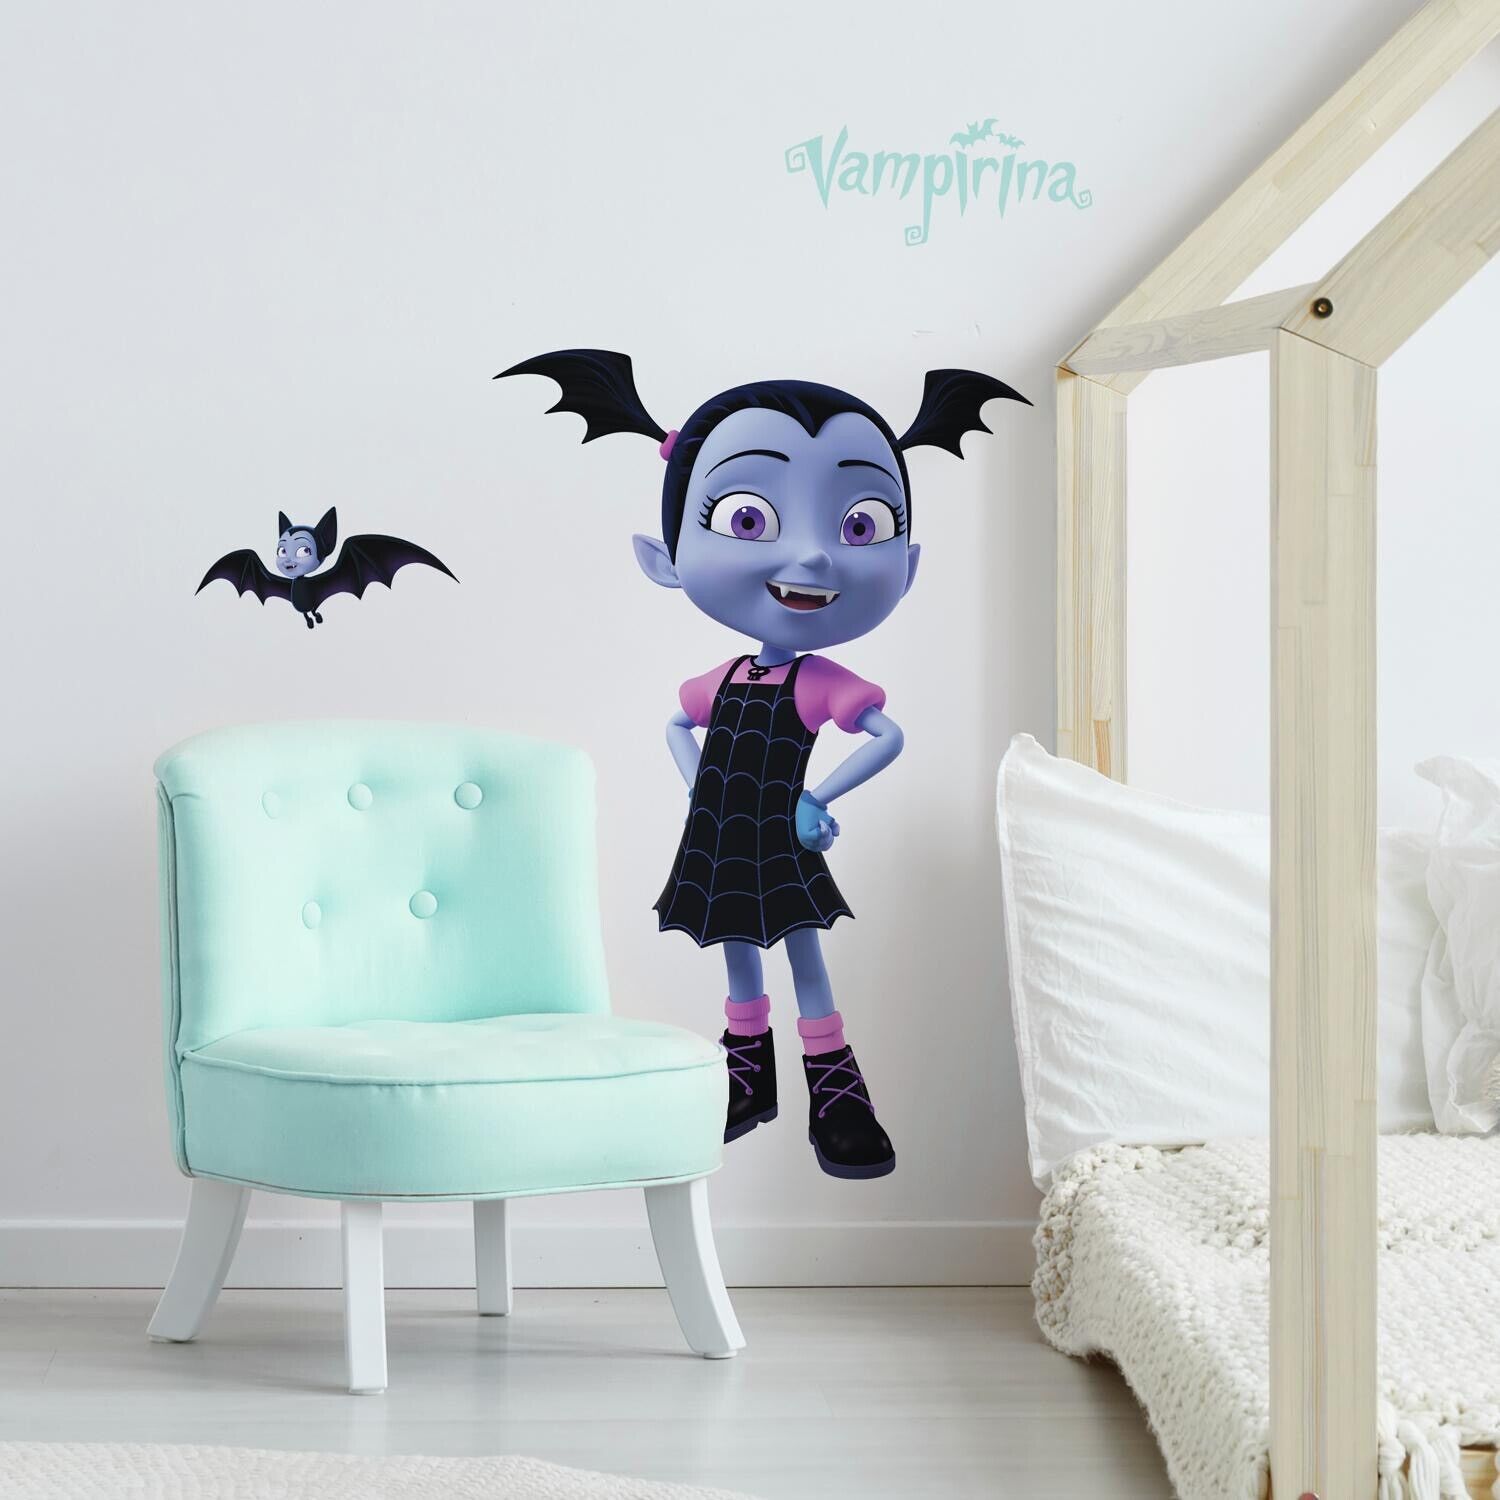 Disney Giant Vampirina Wall Decals Spooktacular Girl Room Decor Vampire Stickers